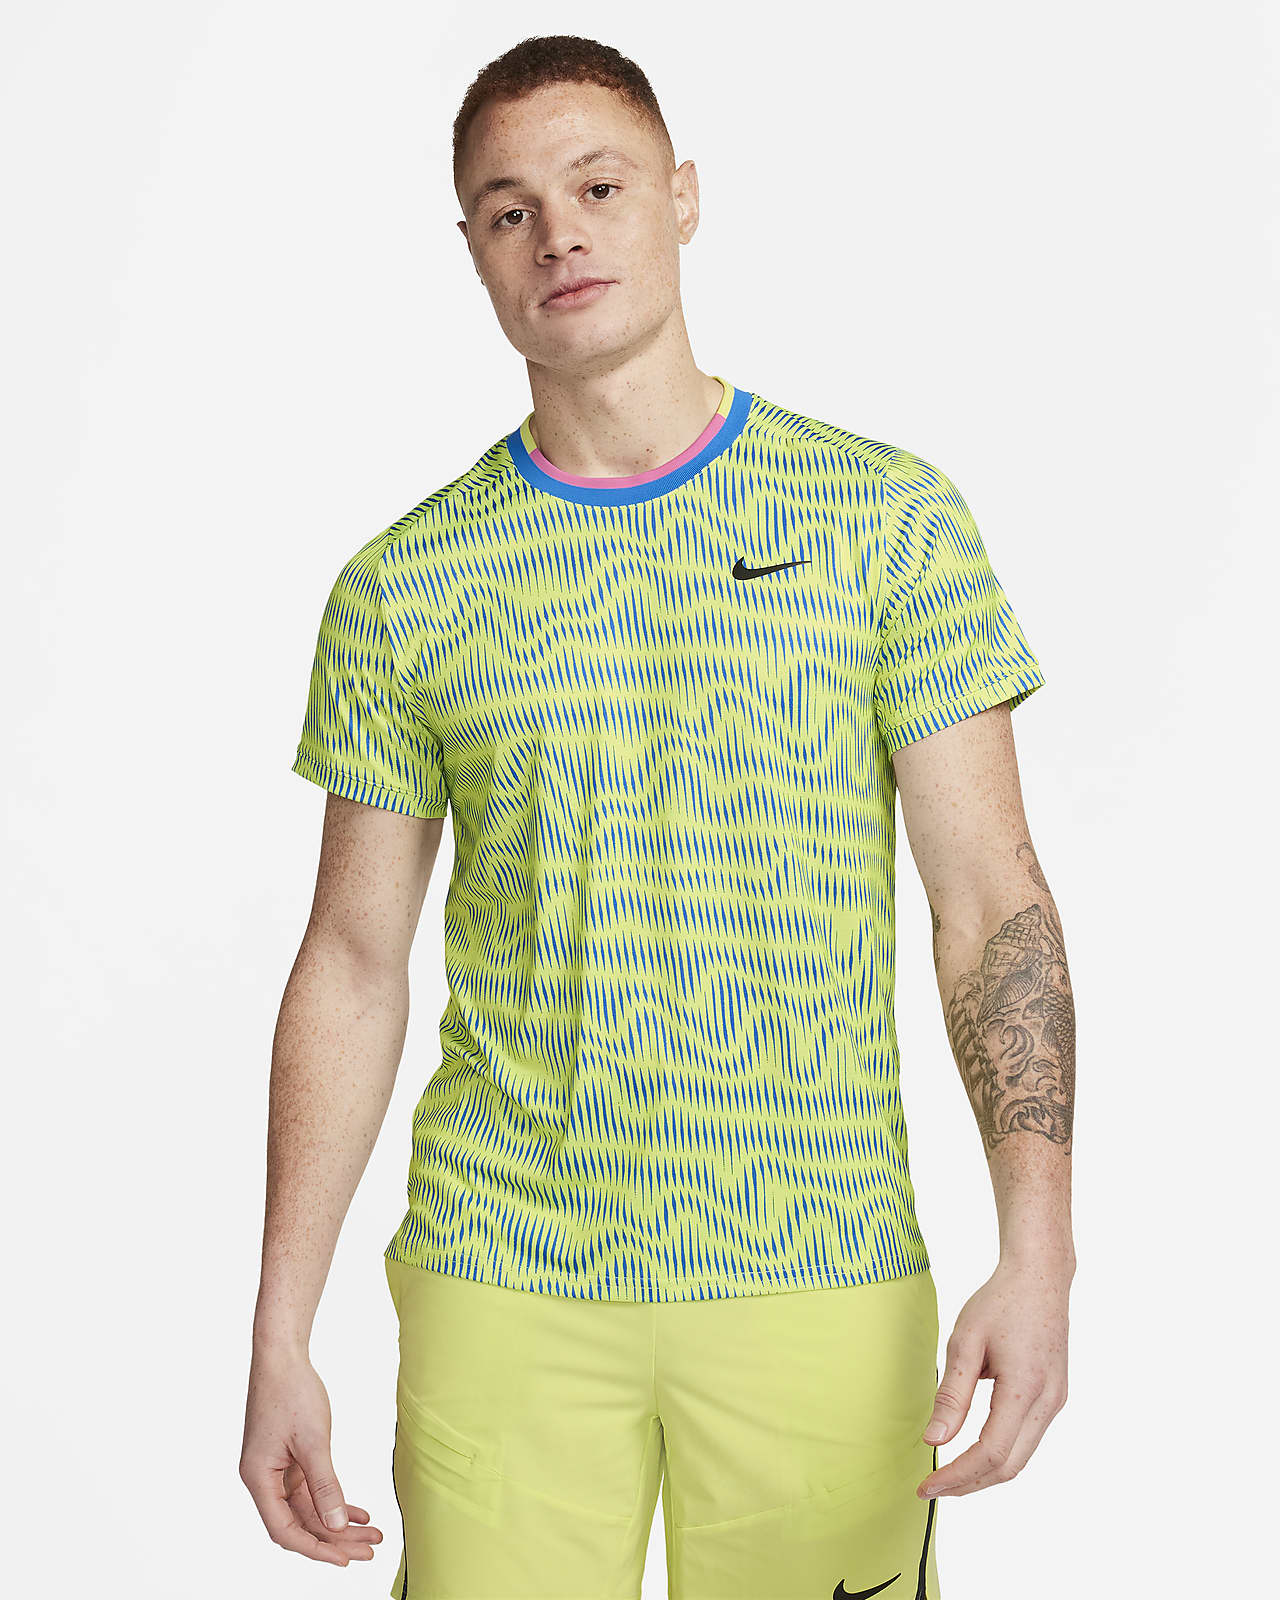 Nike Dri-FIT Advantage Camiseta de Tenis Hombre - White/Black